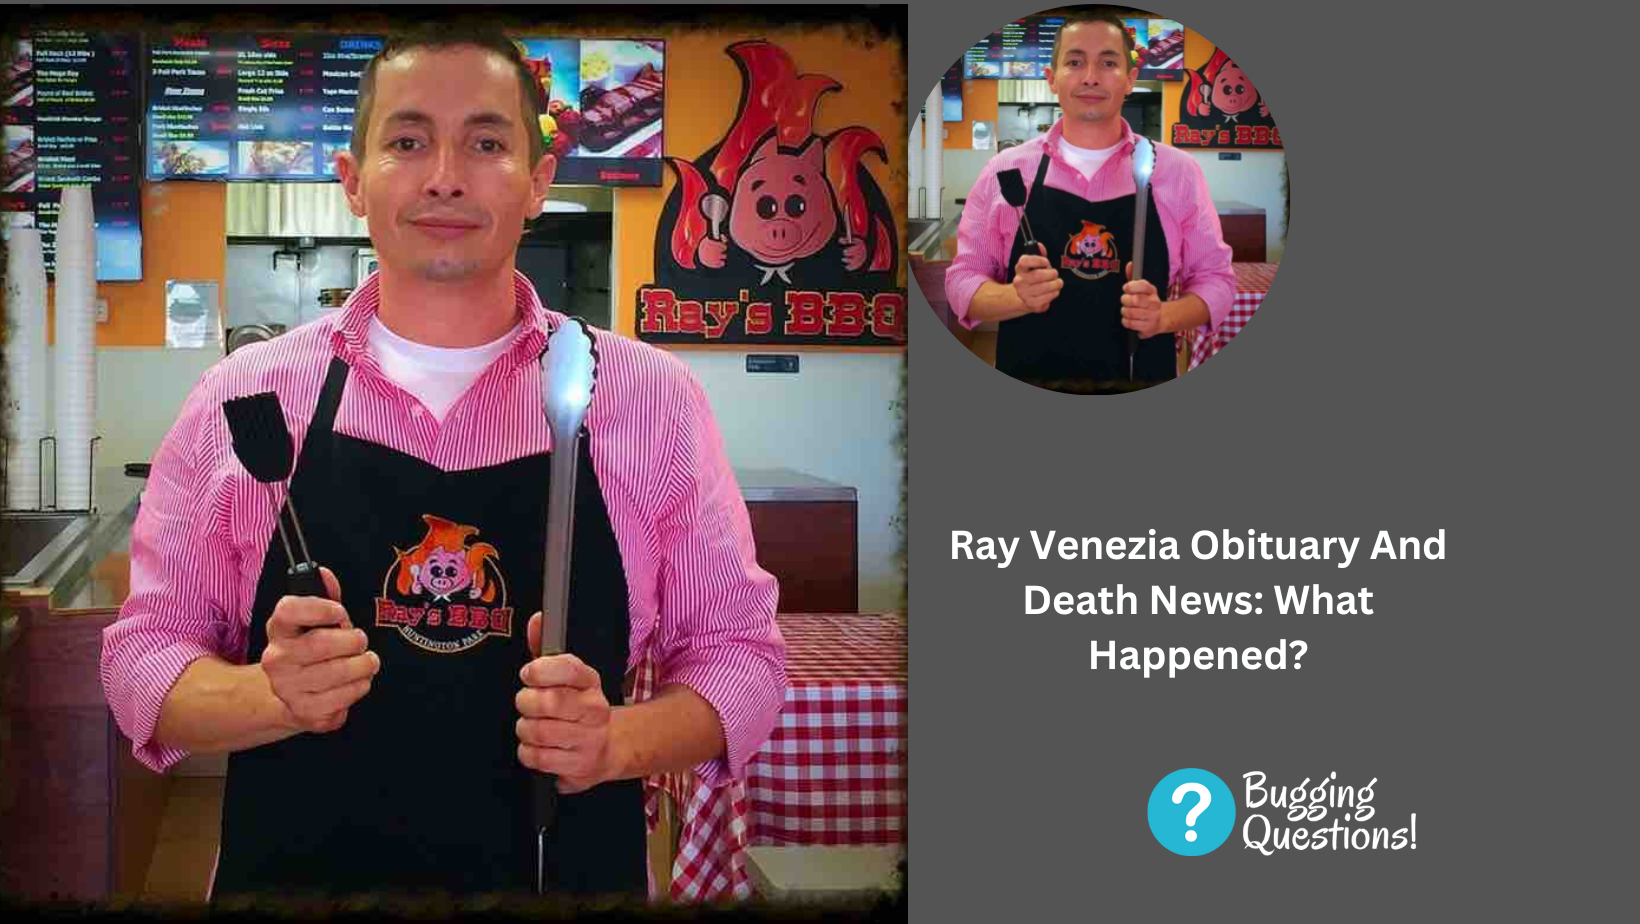 Ray Venezia Obituary And Death News: What Happened?